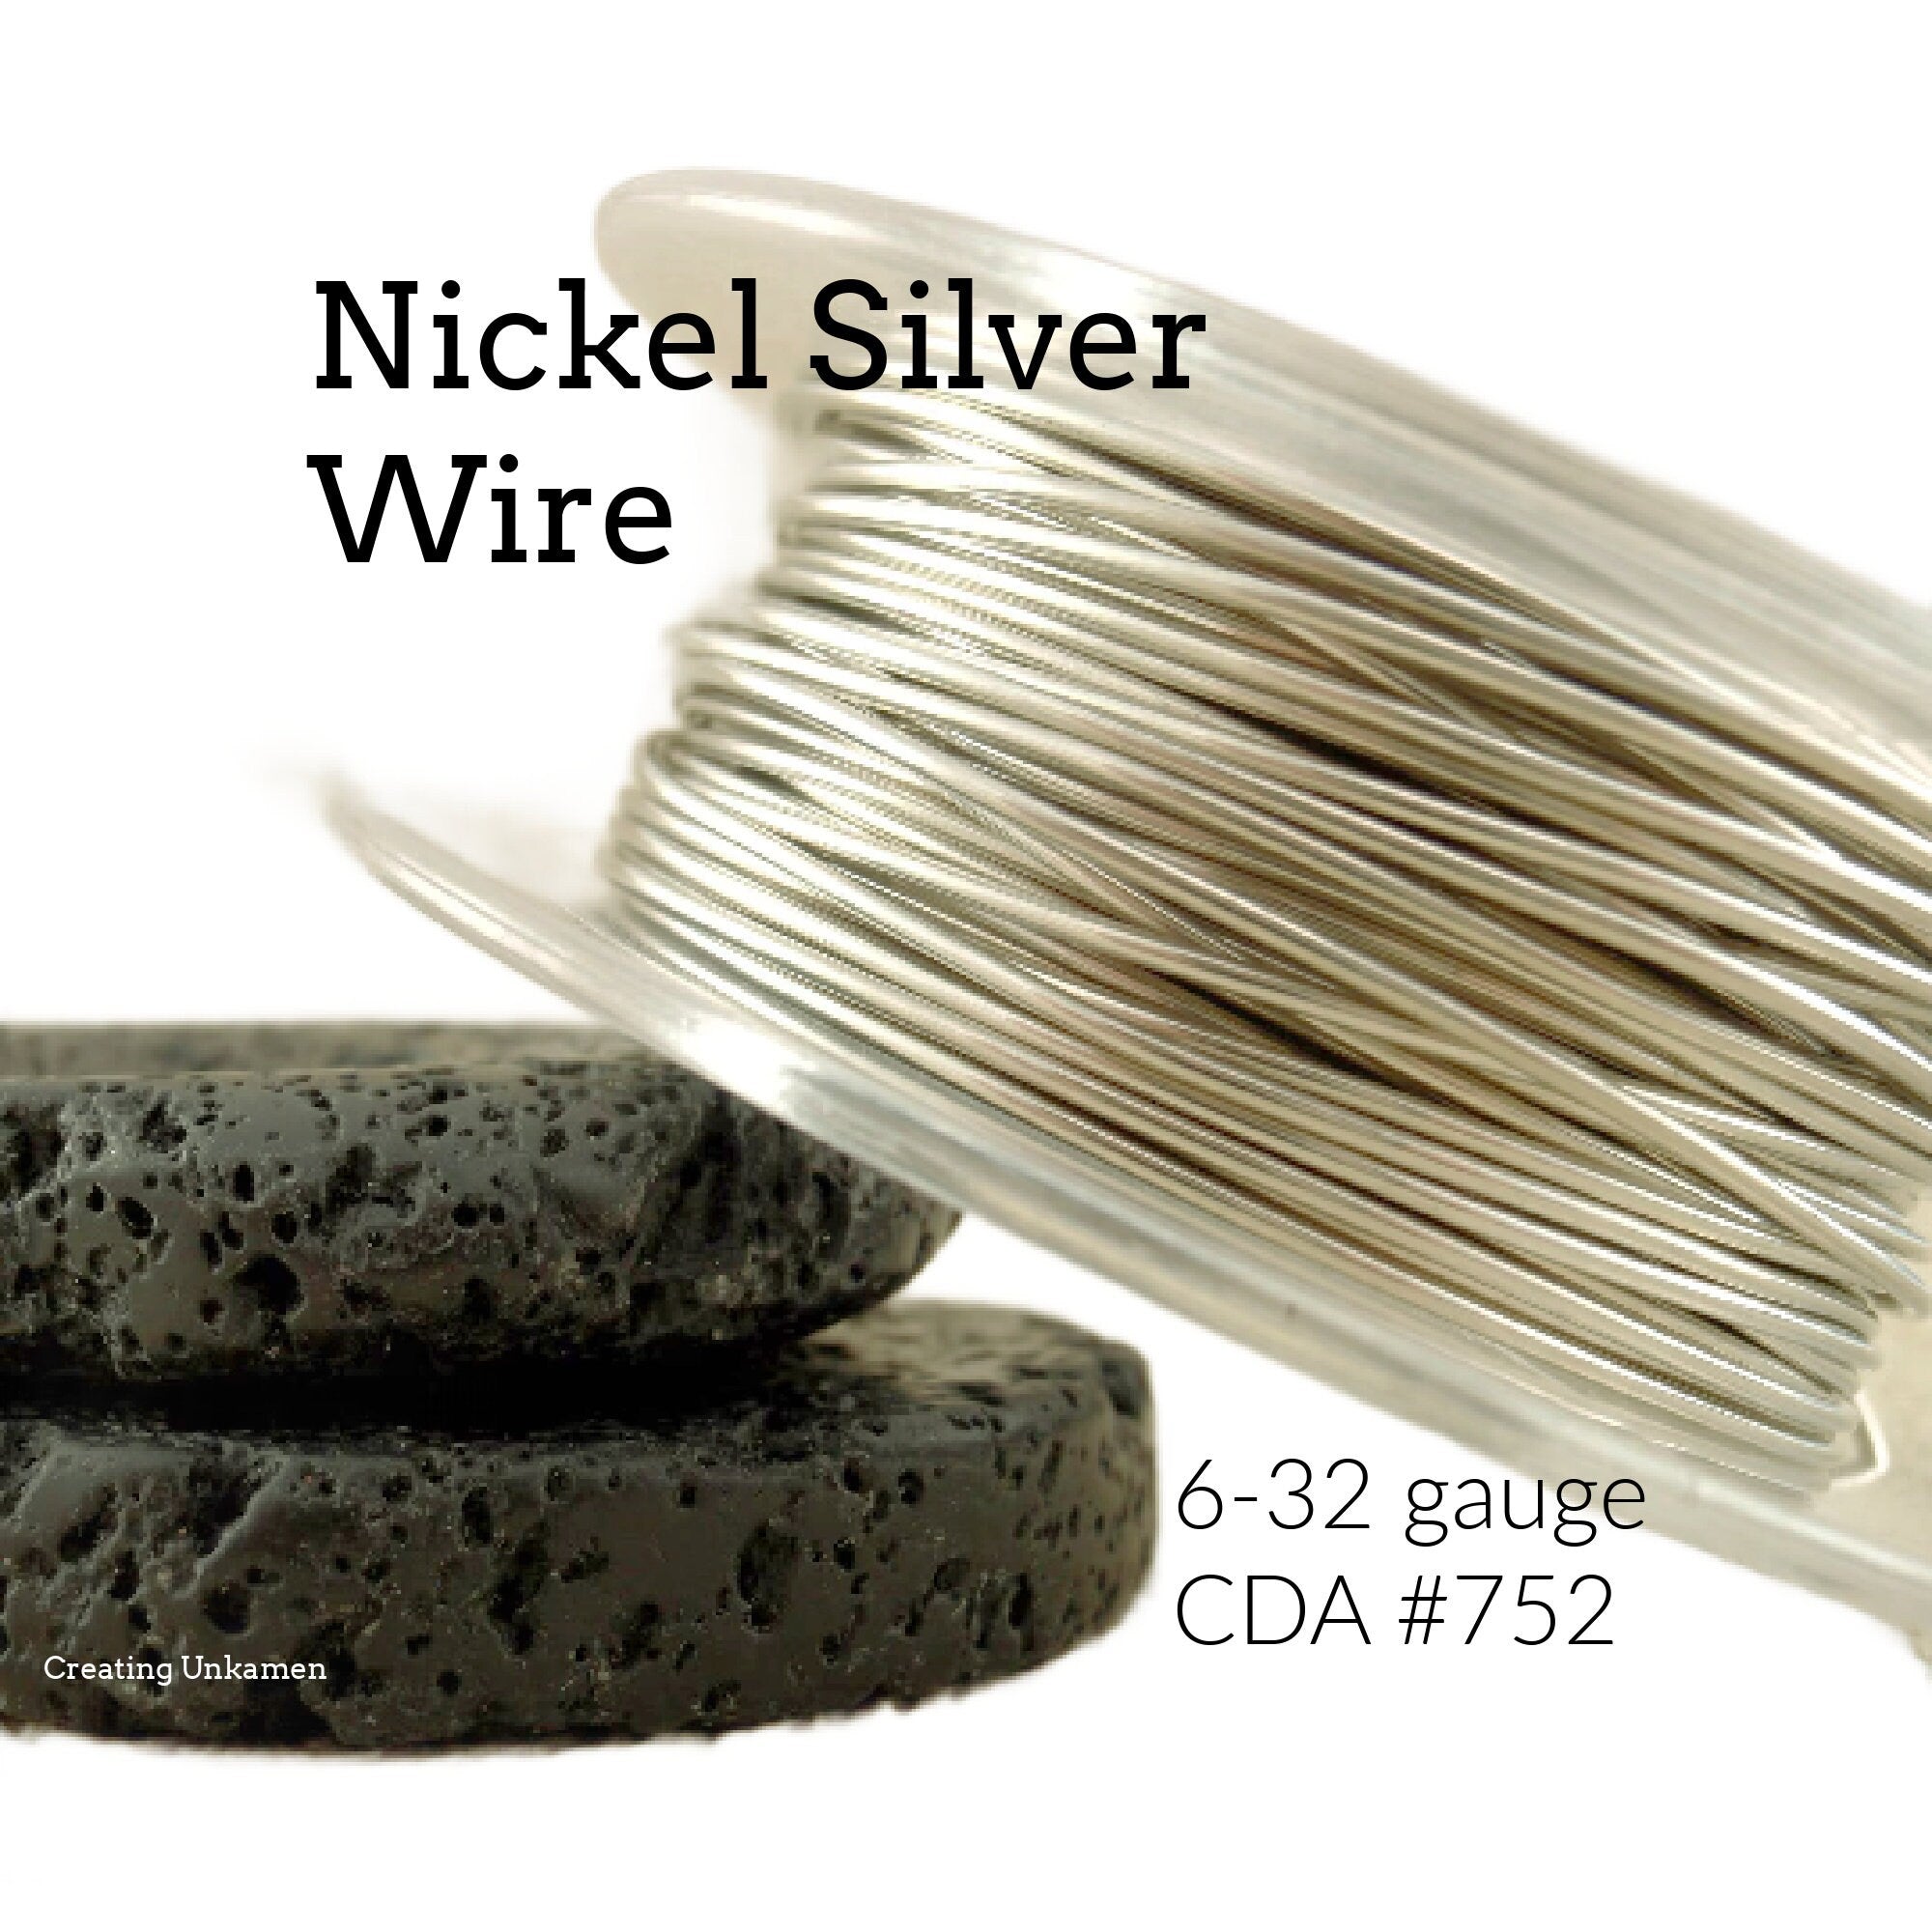 26 Gauge Round German Silver Metal Wire - Half Hard with Copper